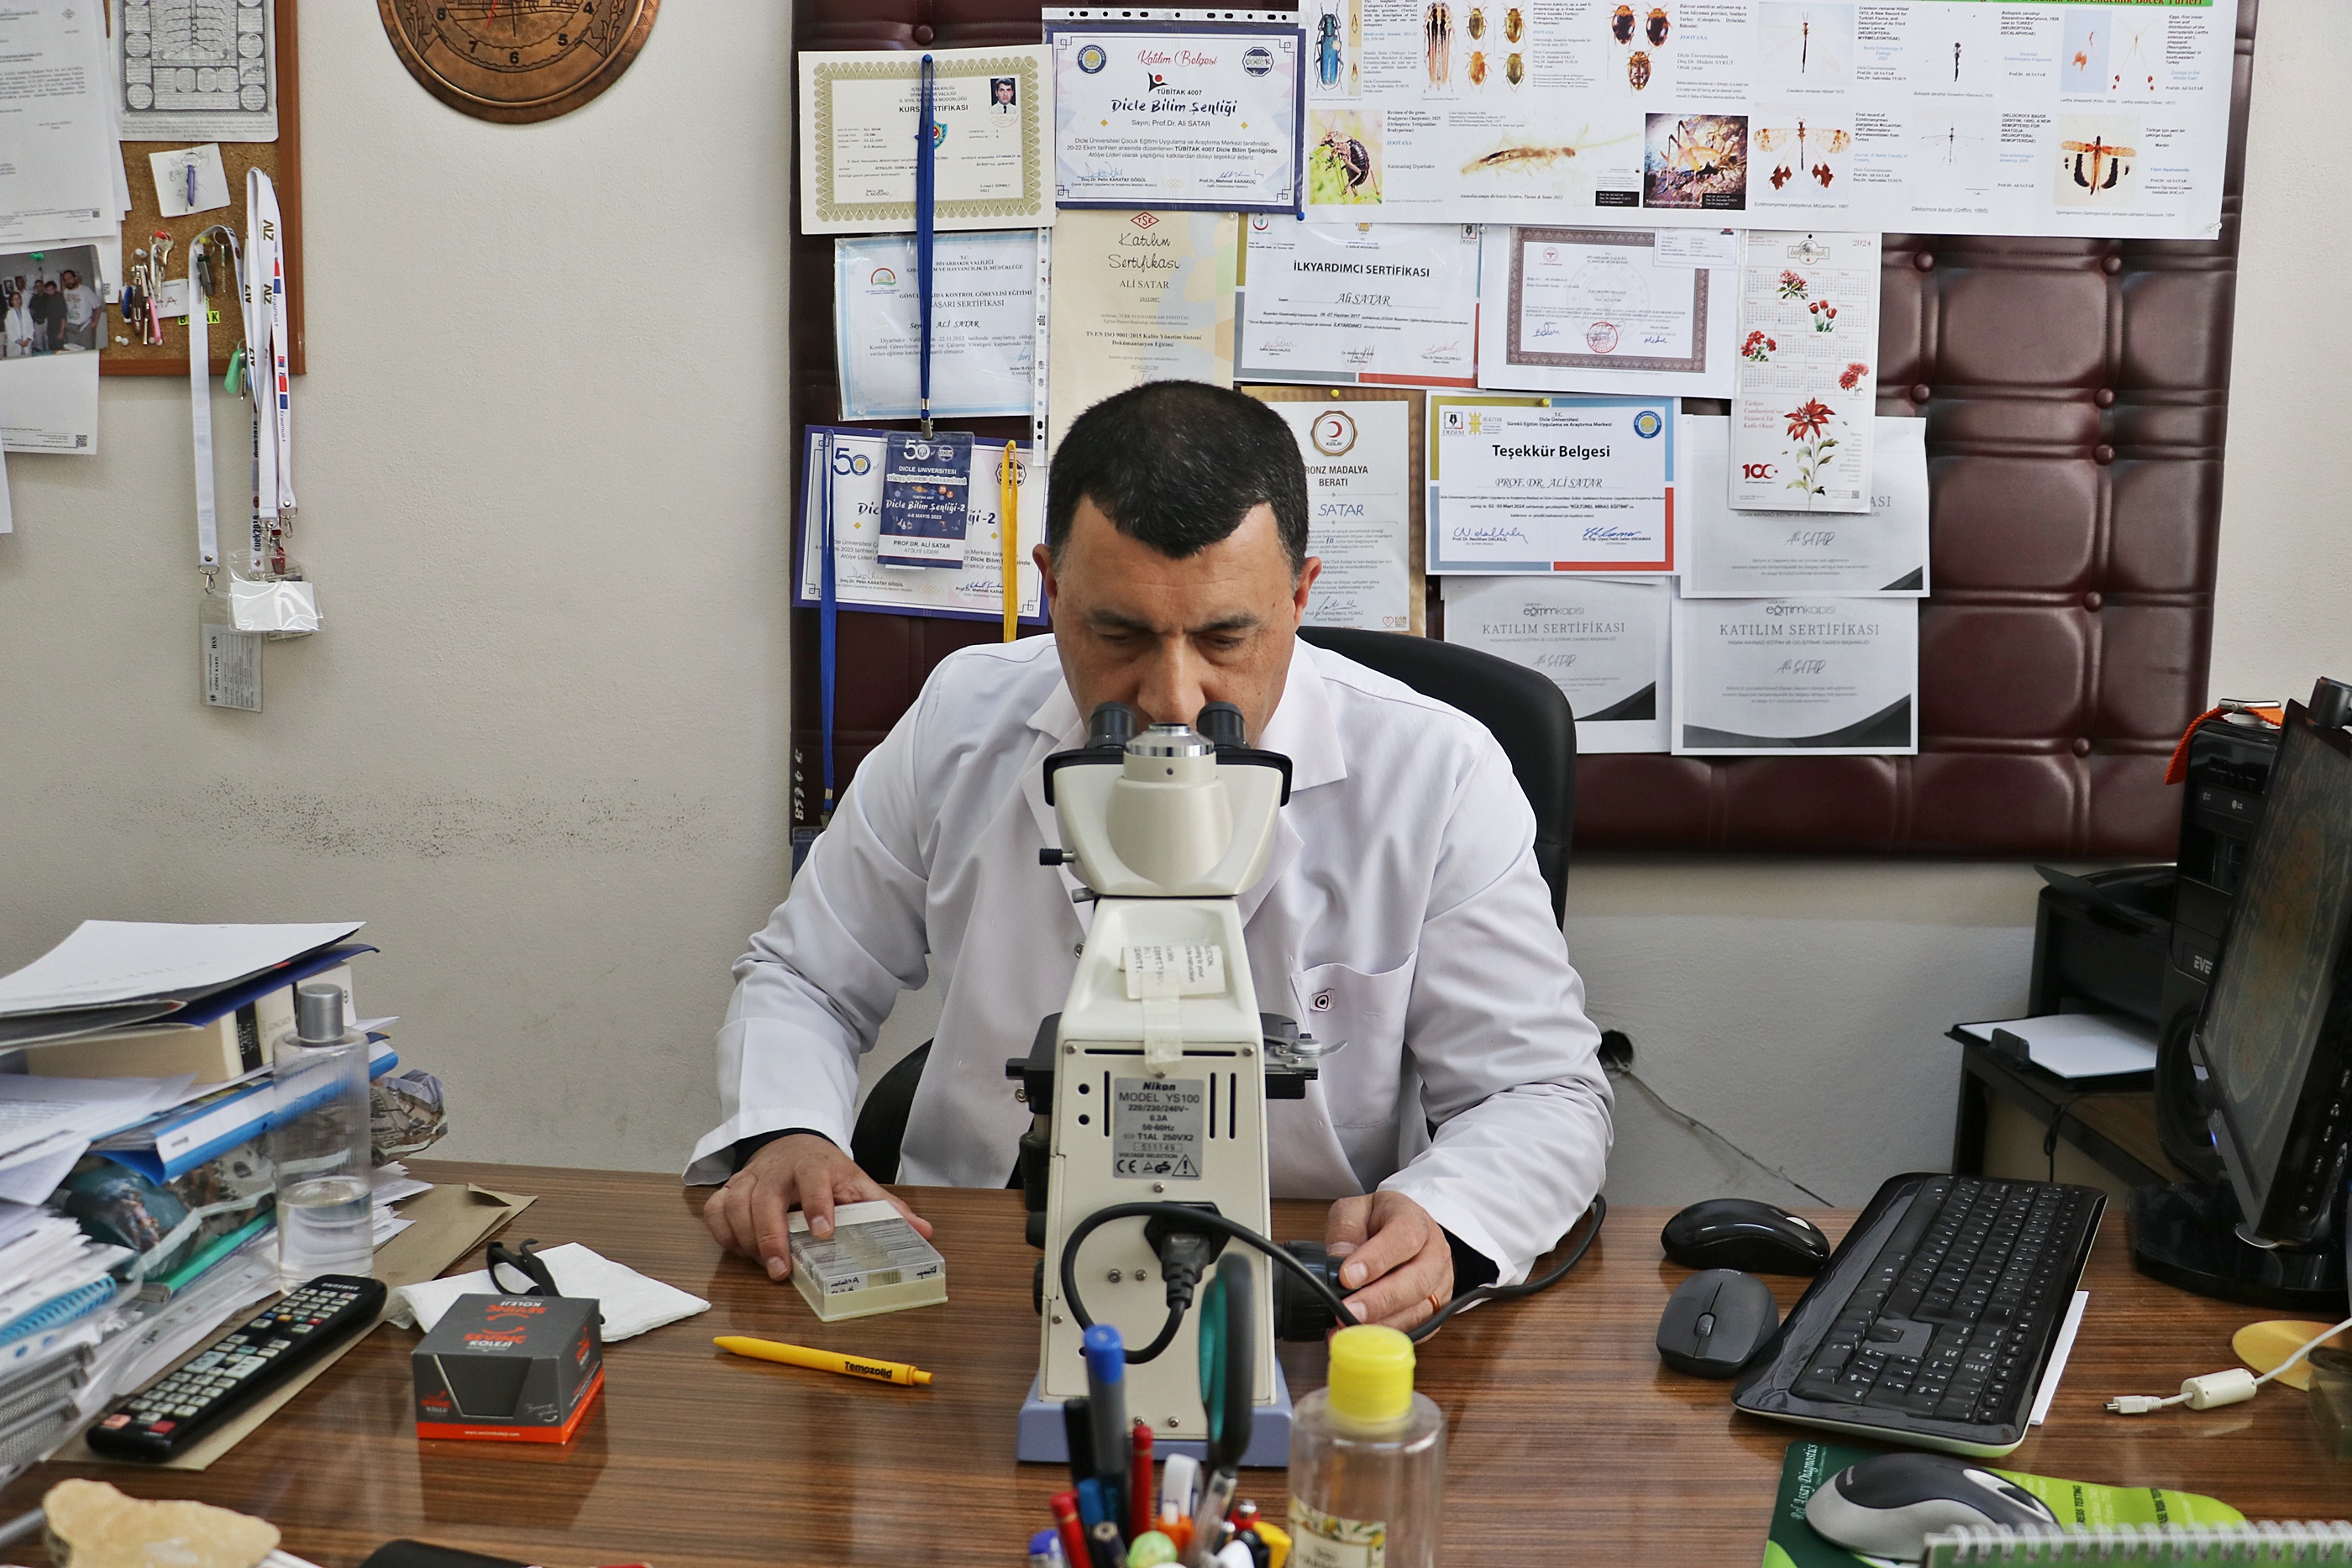 Diyarbakir Prof. Dr. Satar Biriken Yagm 26536 (1)